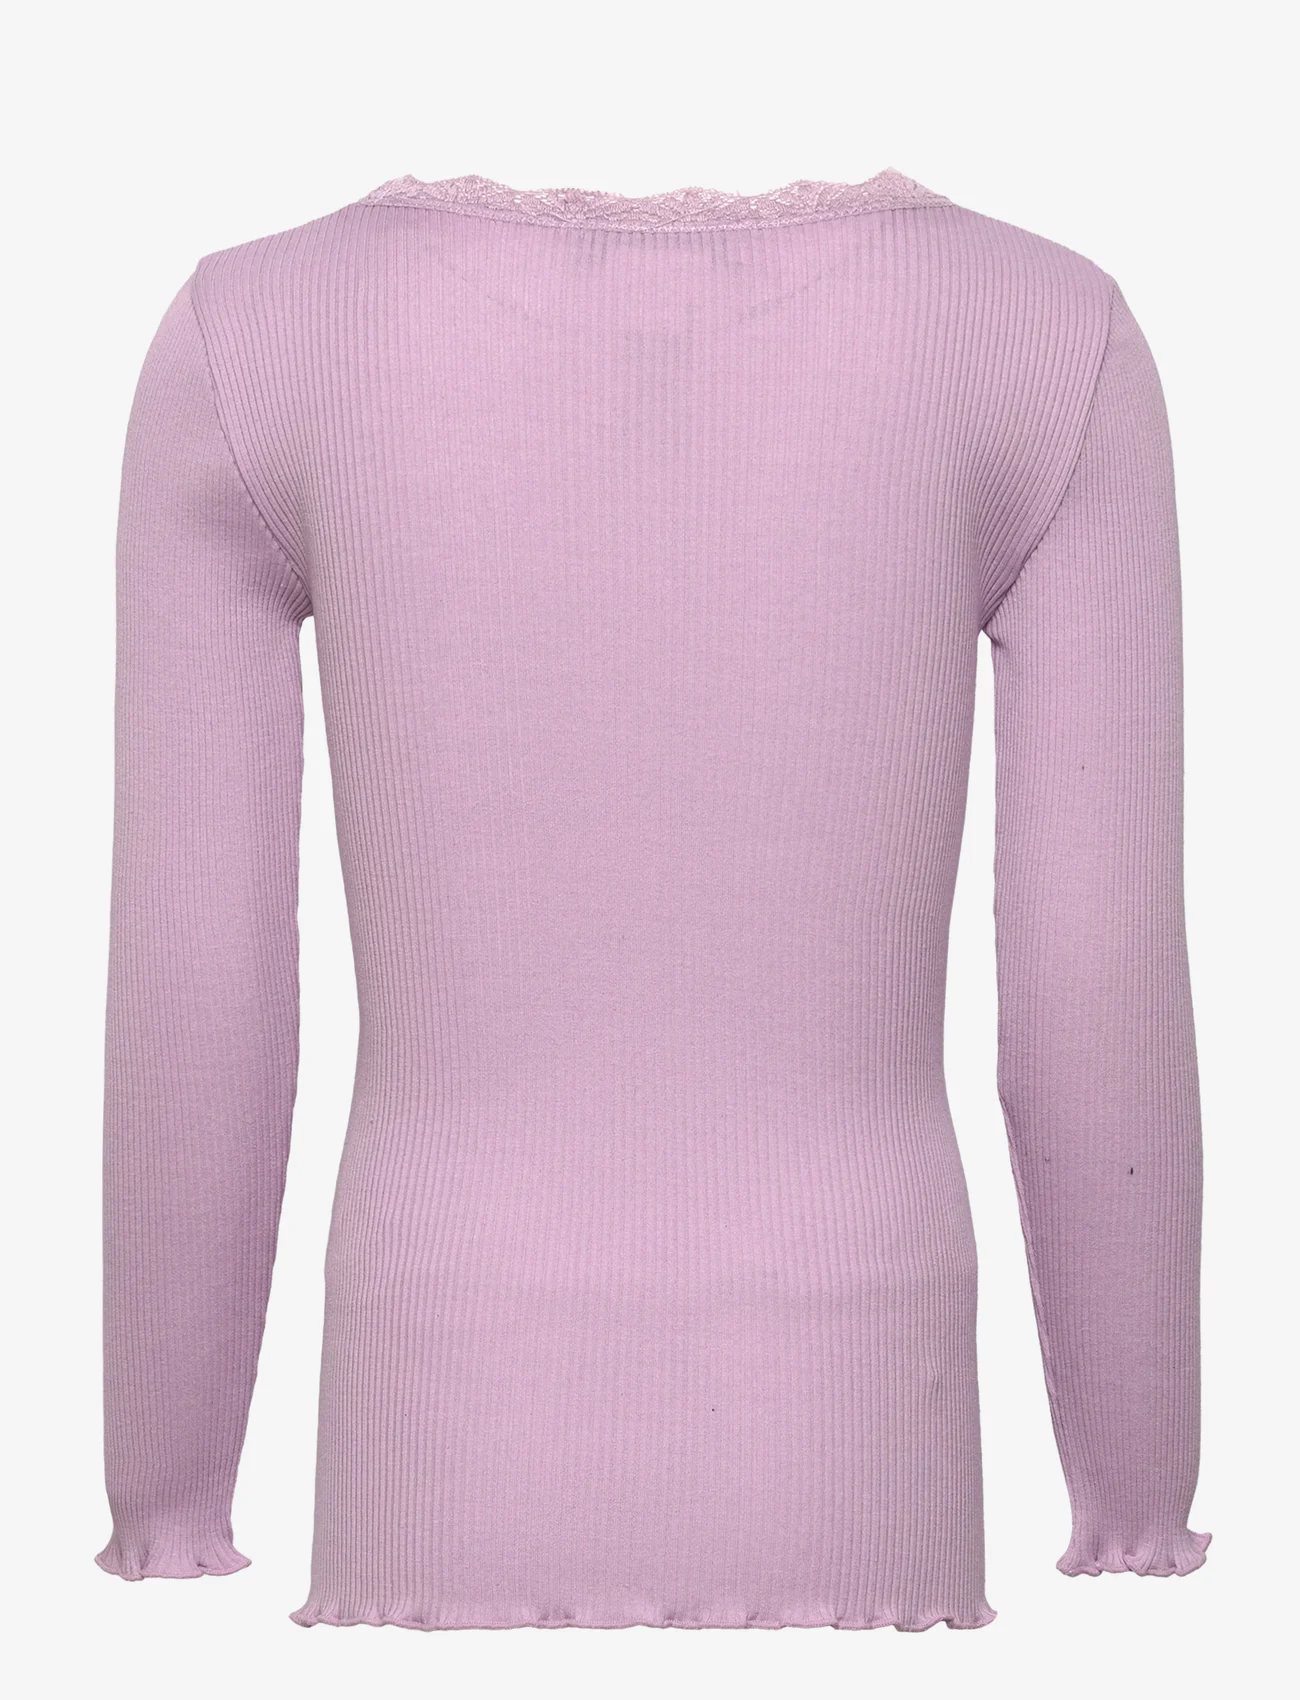 Rosemunde Kids - Silk t-shirt ls w/ lace - langärmelige - lavender frost - 1